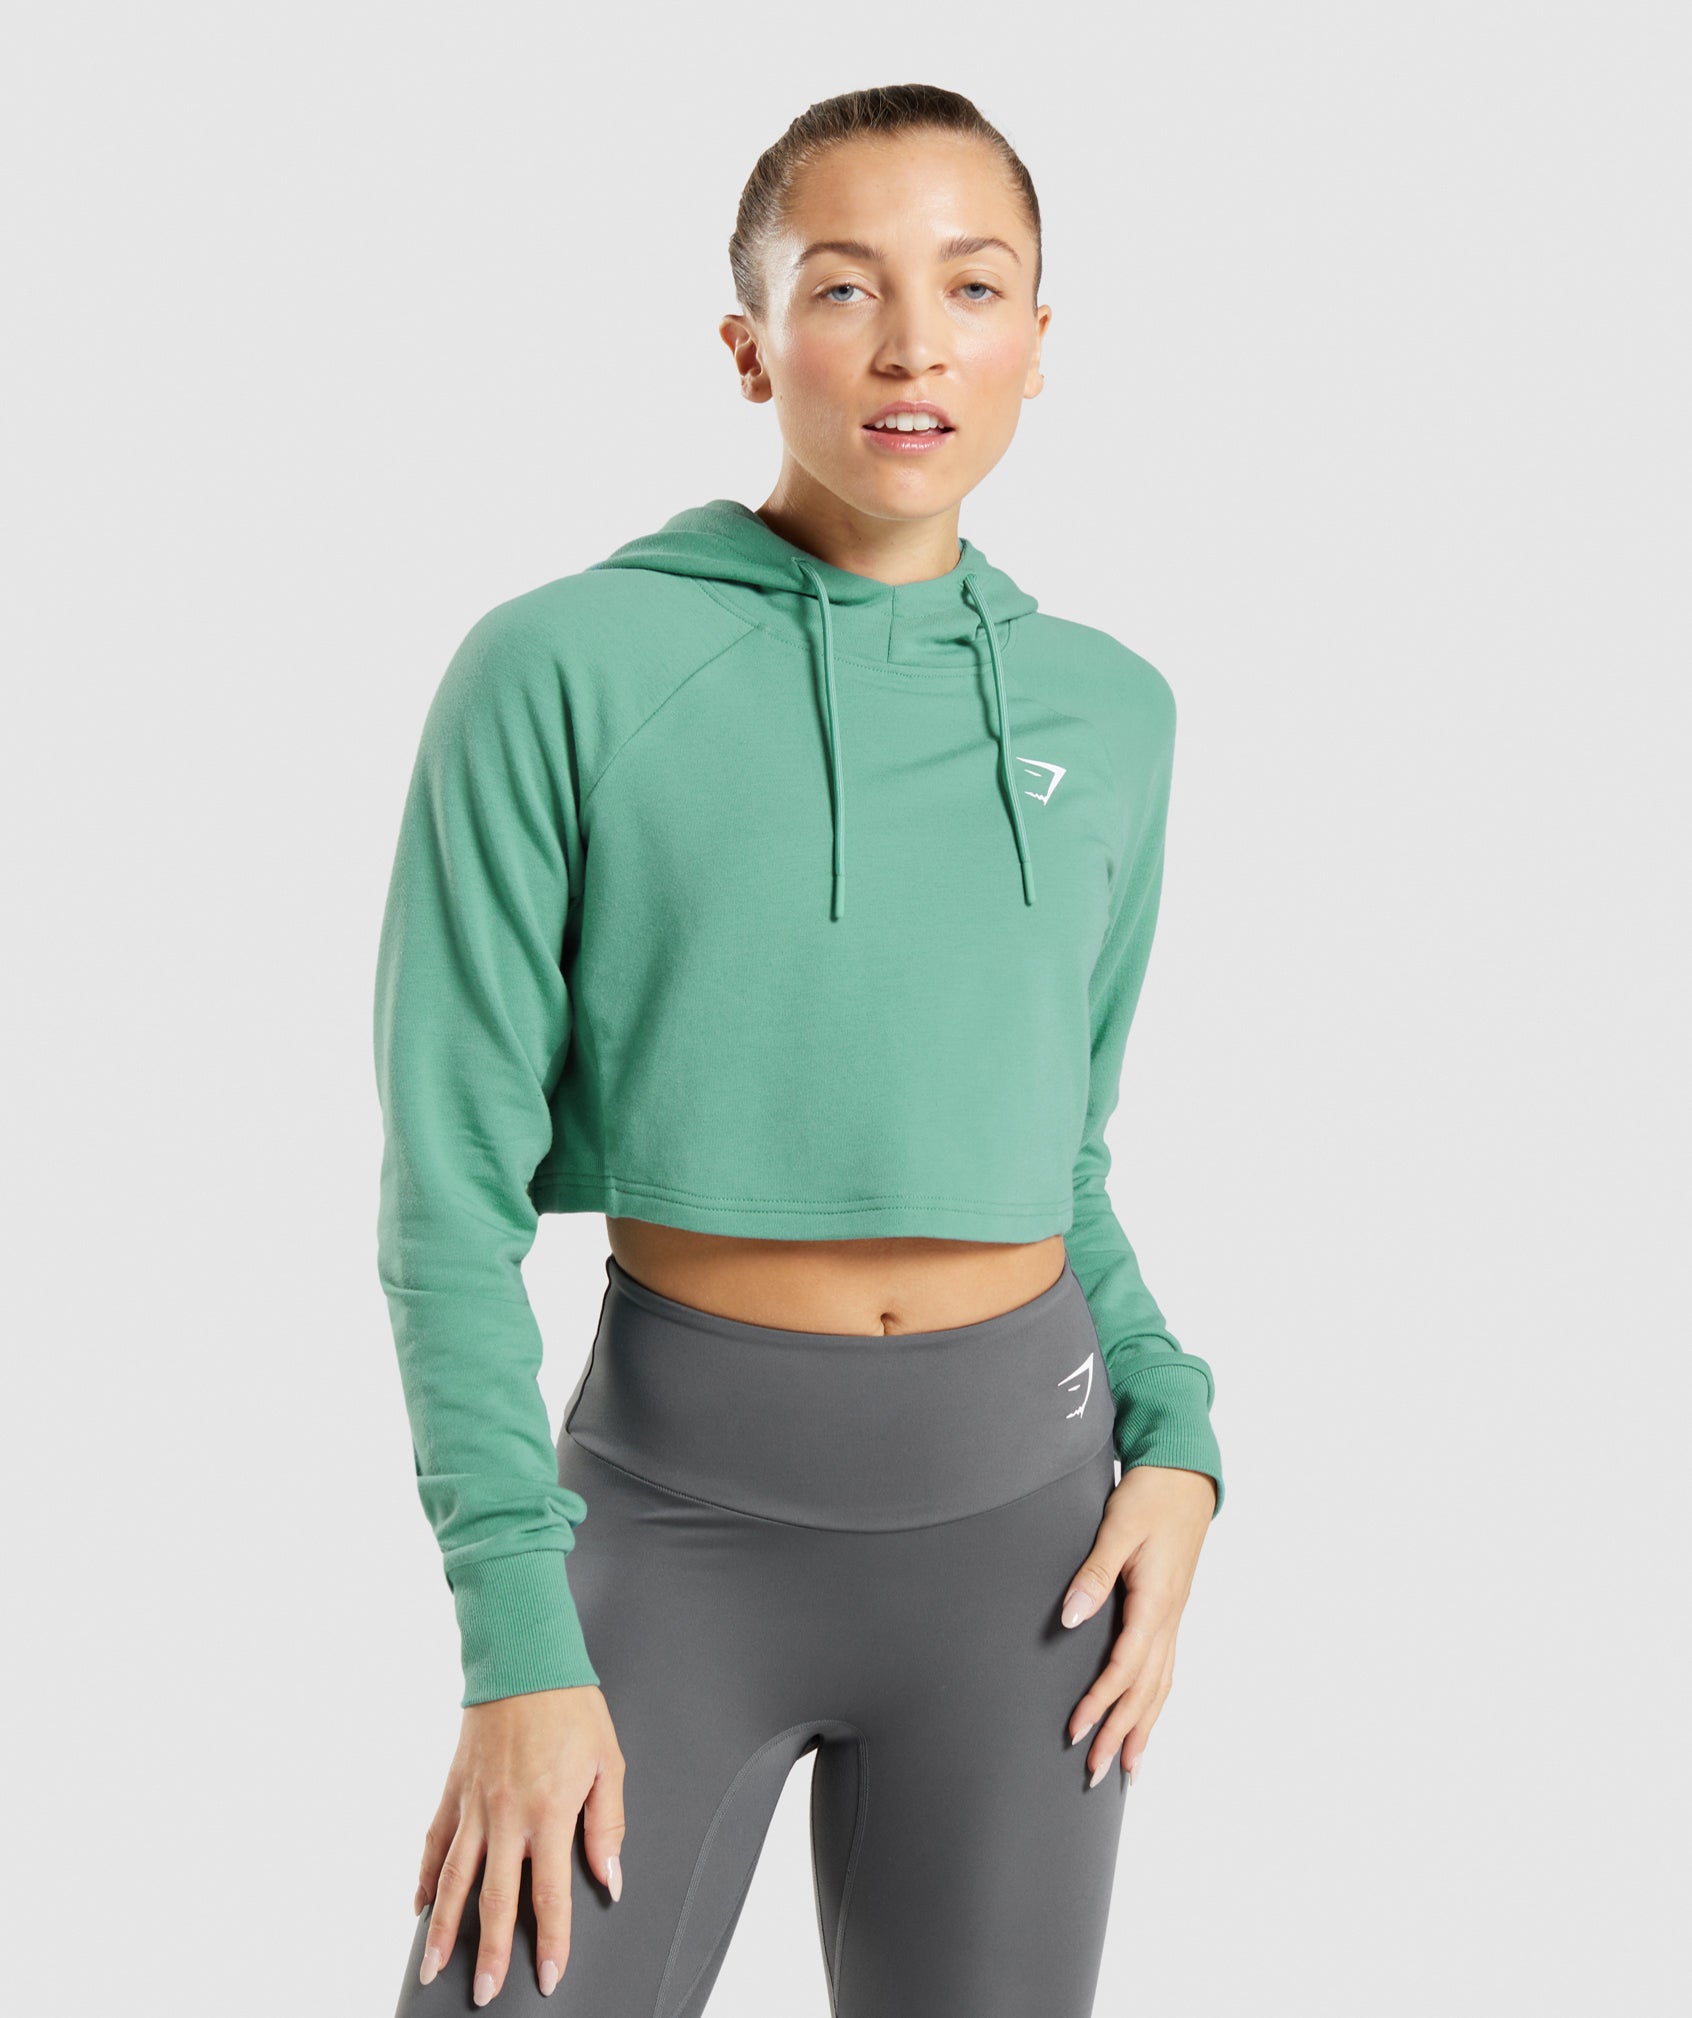 Womens Gymshark Training Pippa Pullover Sportswear Top Green New